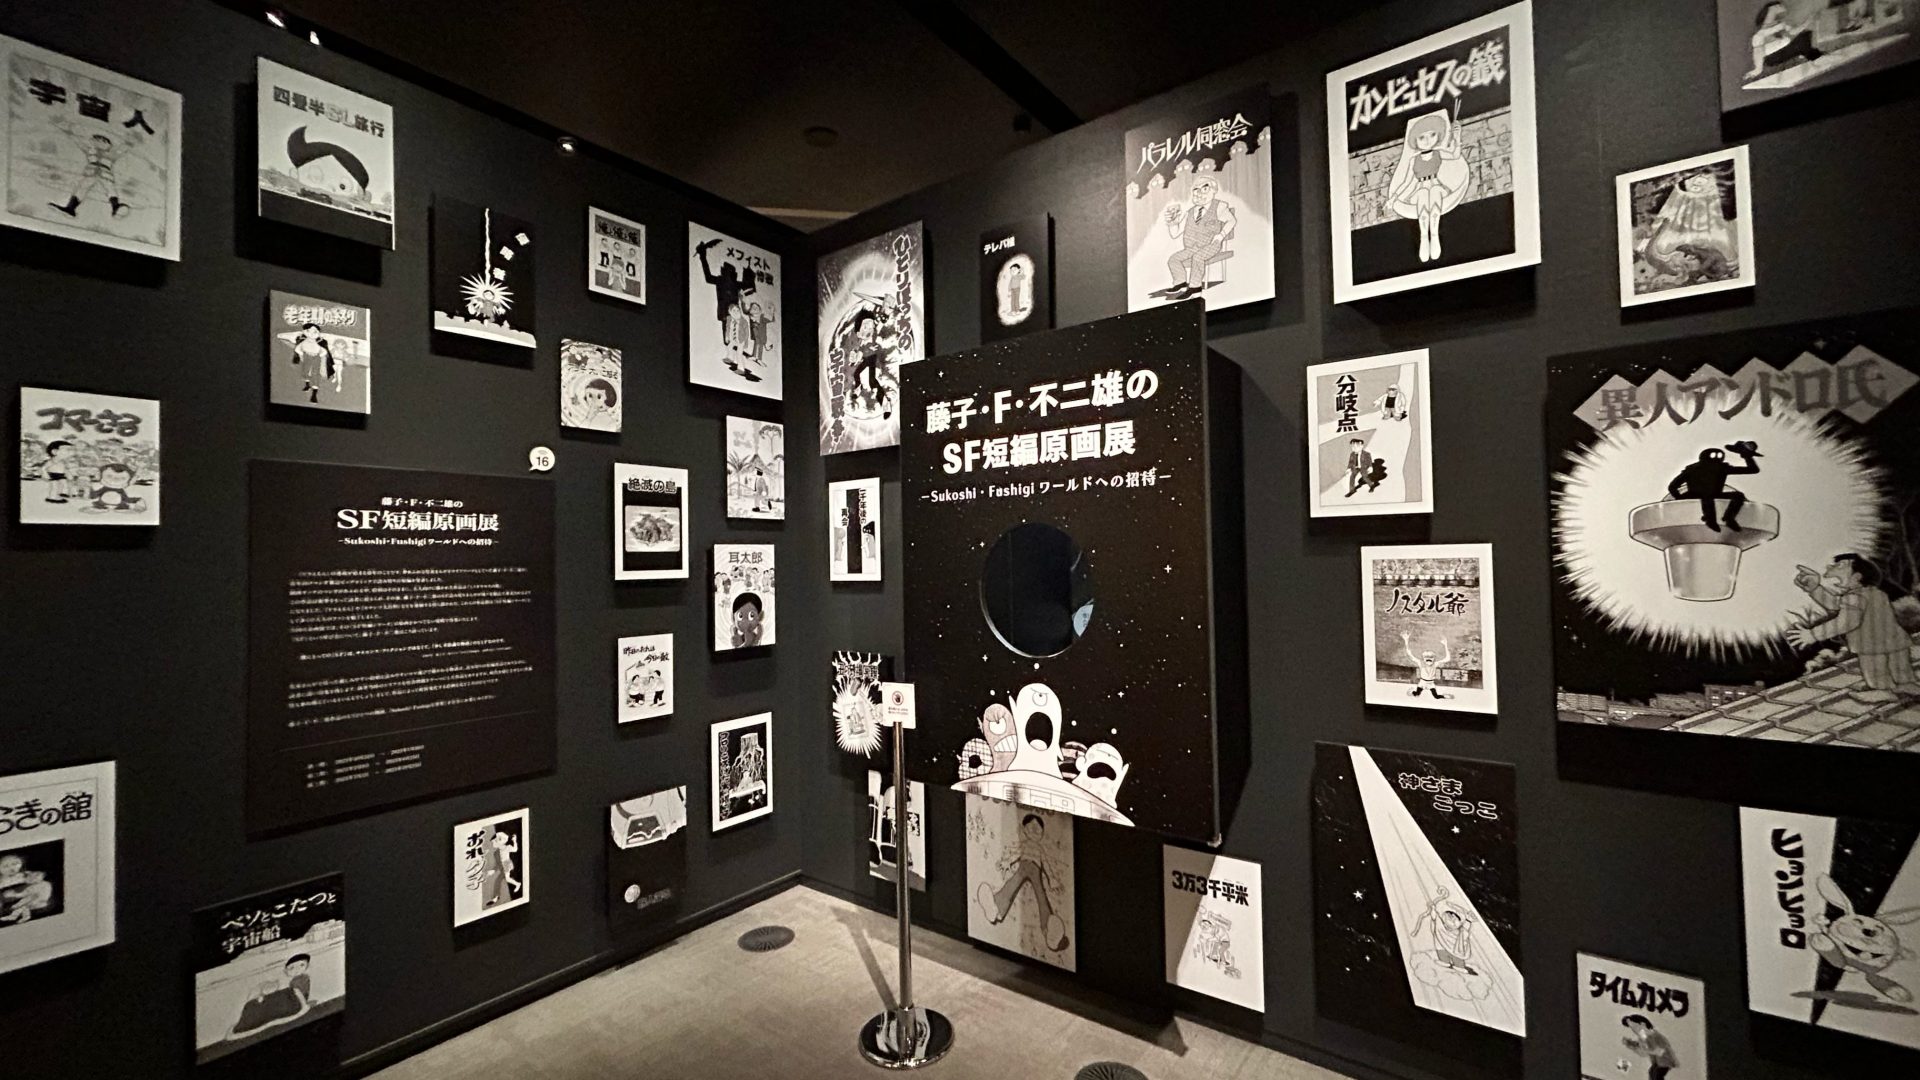 SF短編原両展の様子、藤子F不二雄の今までの作品が壁２面に渡りモノクロで展示されており、撮影スポットもある